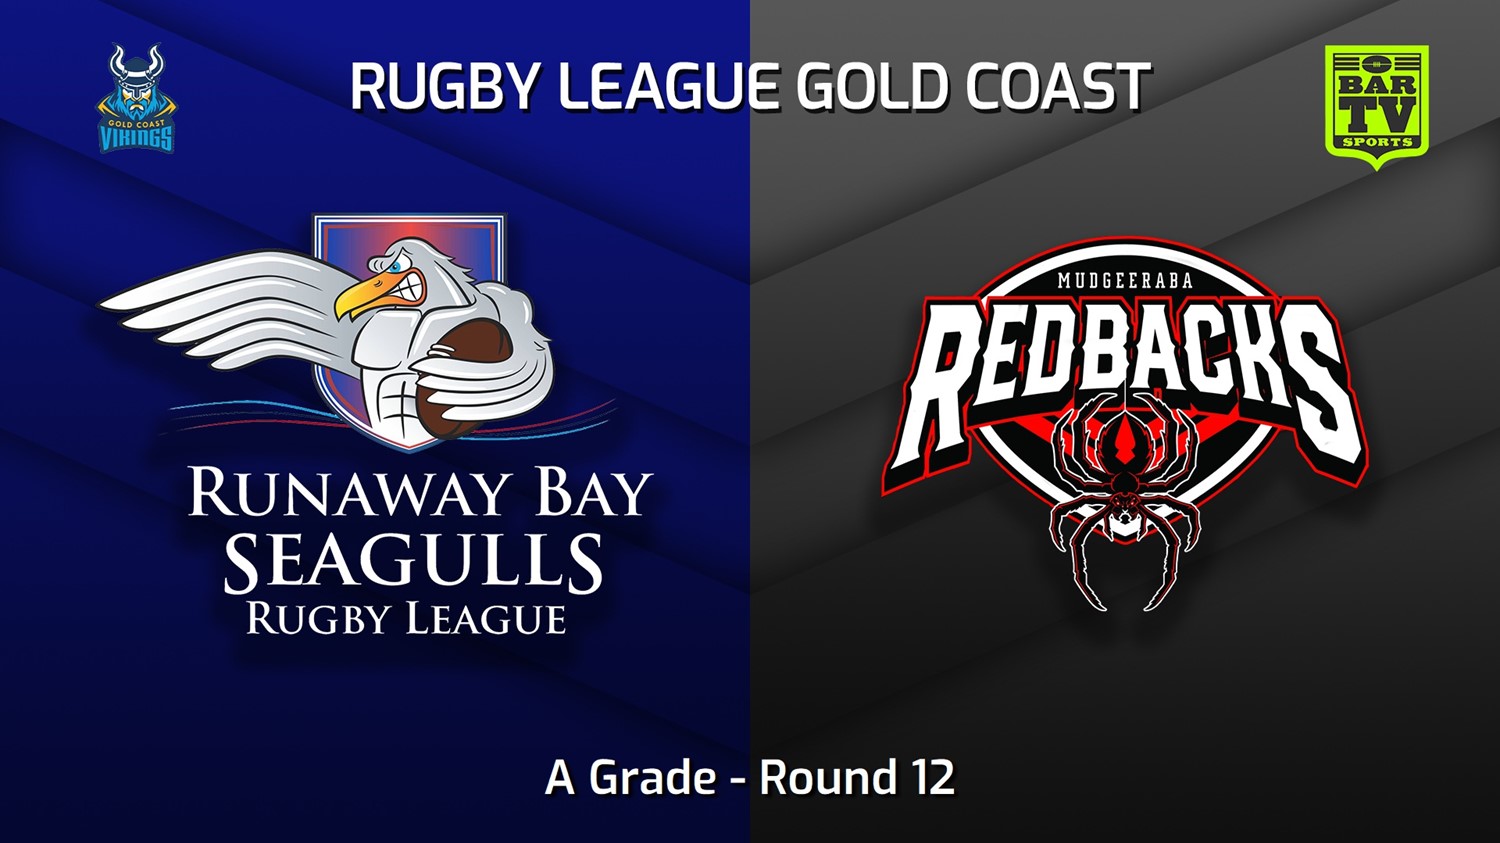 220703-Gold Coast Round 12 - A Grade - Runaway Bay Seagulls v Mudgeeraba Redbacks Slate Image